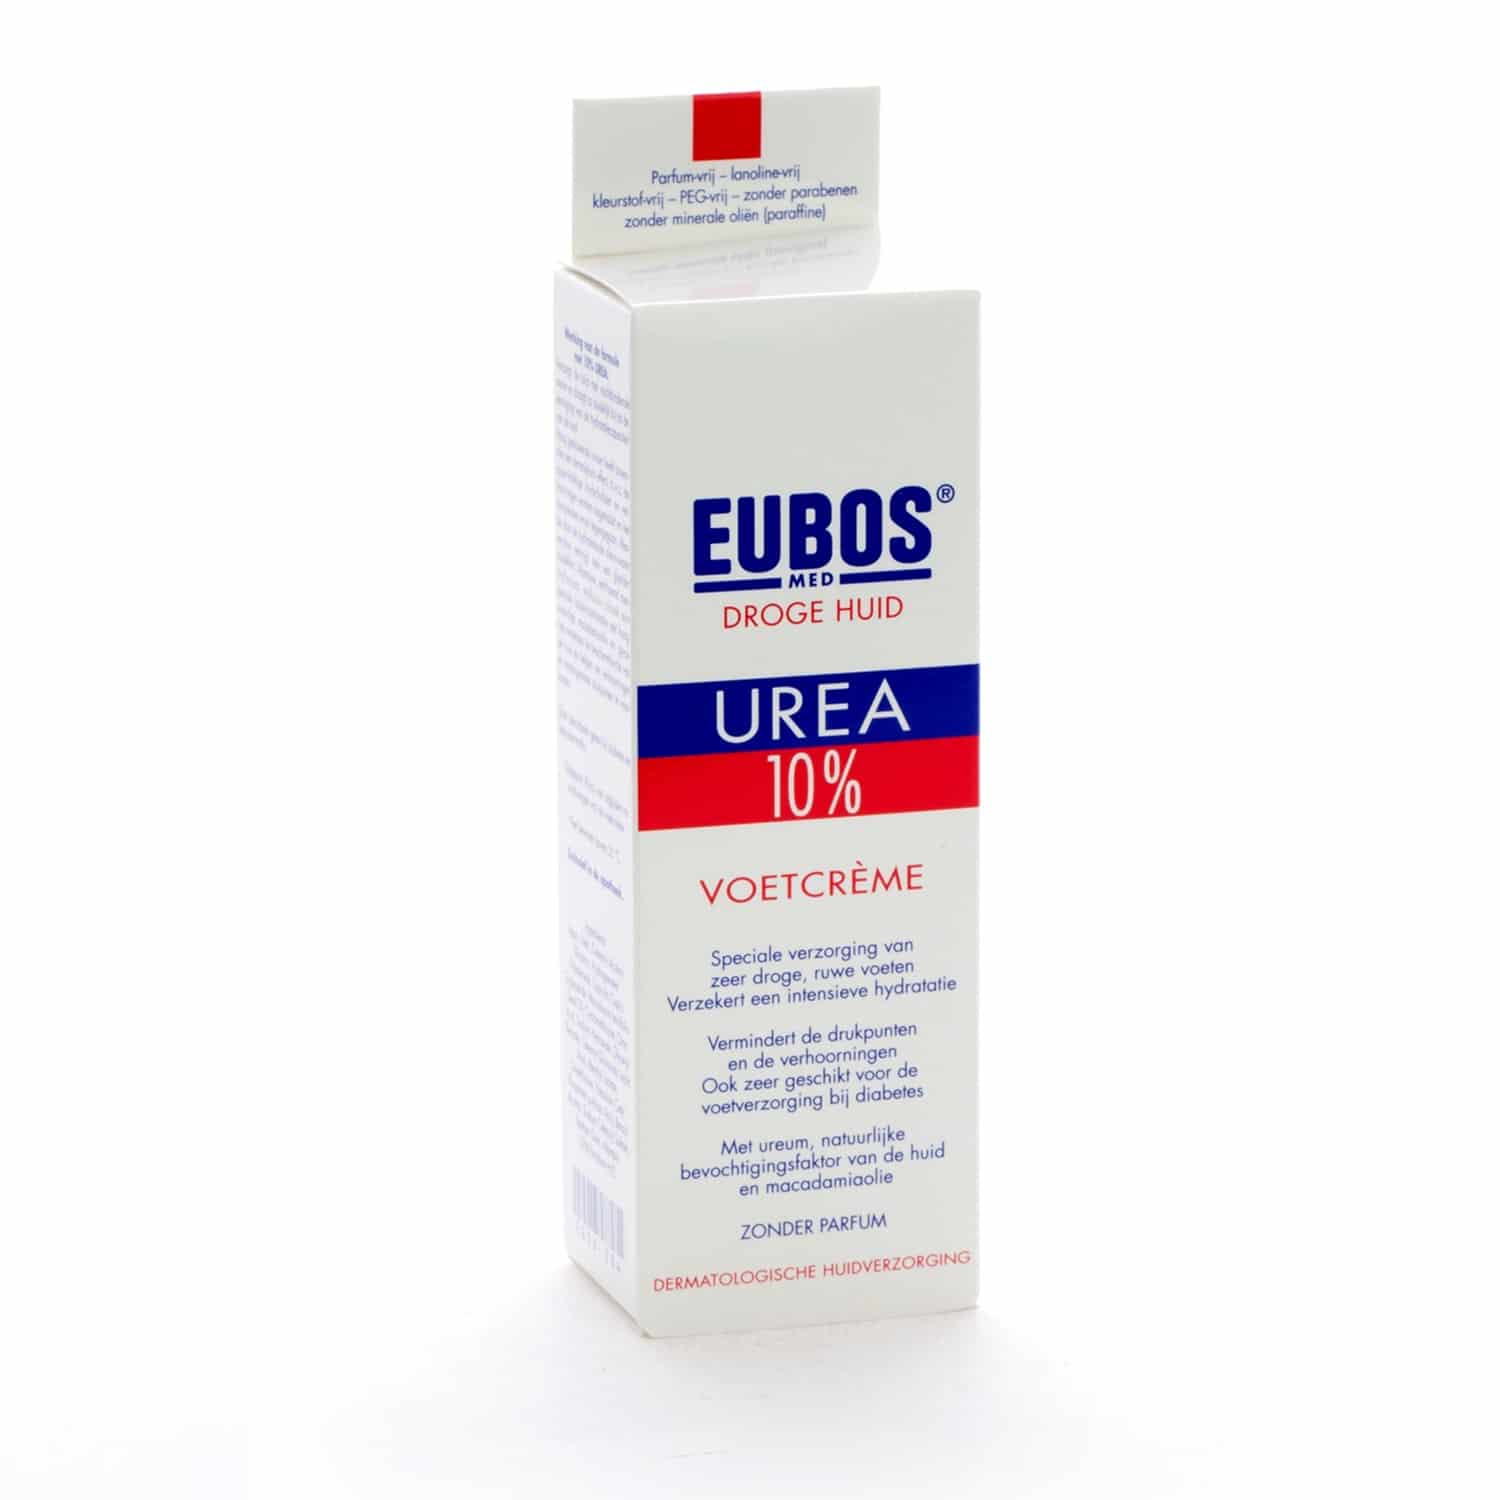 Eubos VoetcrÃ¨me 10% Urea zonder Parfum